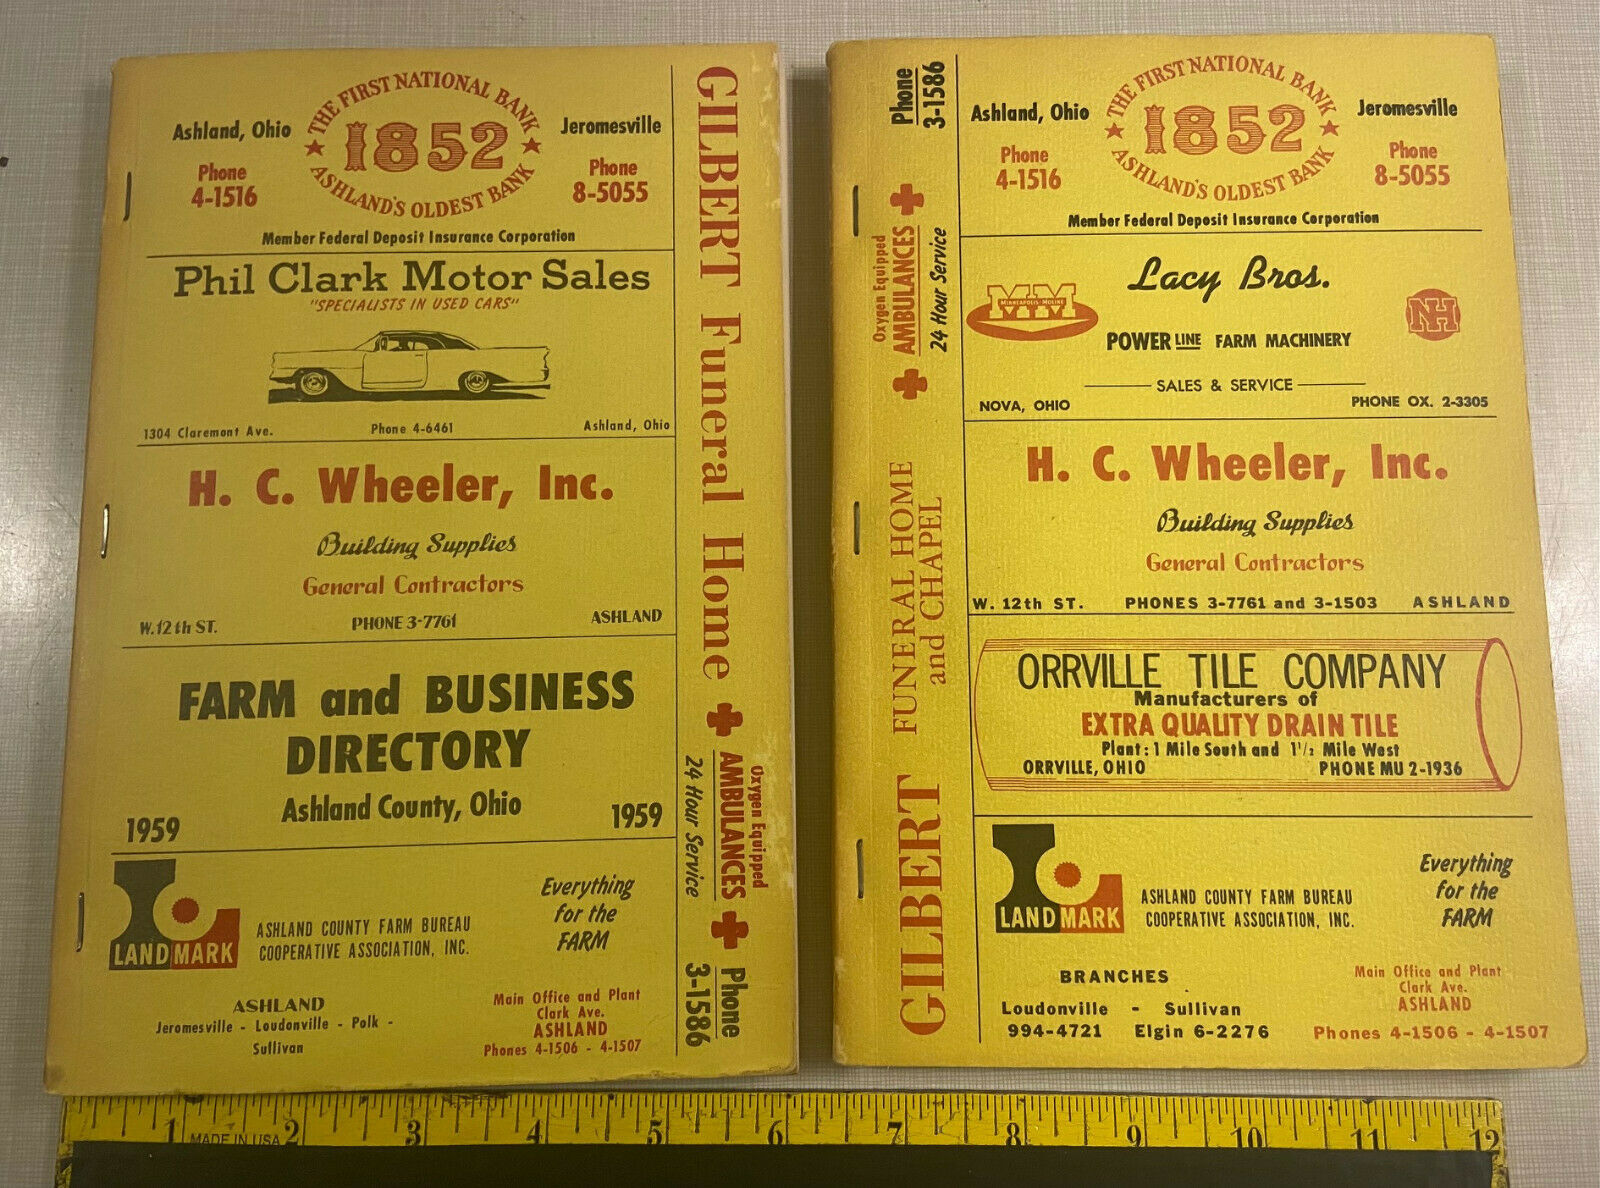 Robinson's 1961, 1959 Ashland County Ohio Rural Directory